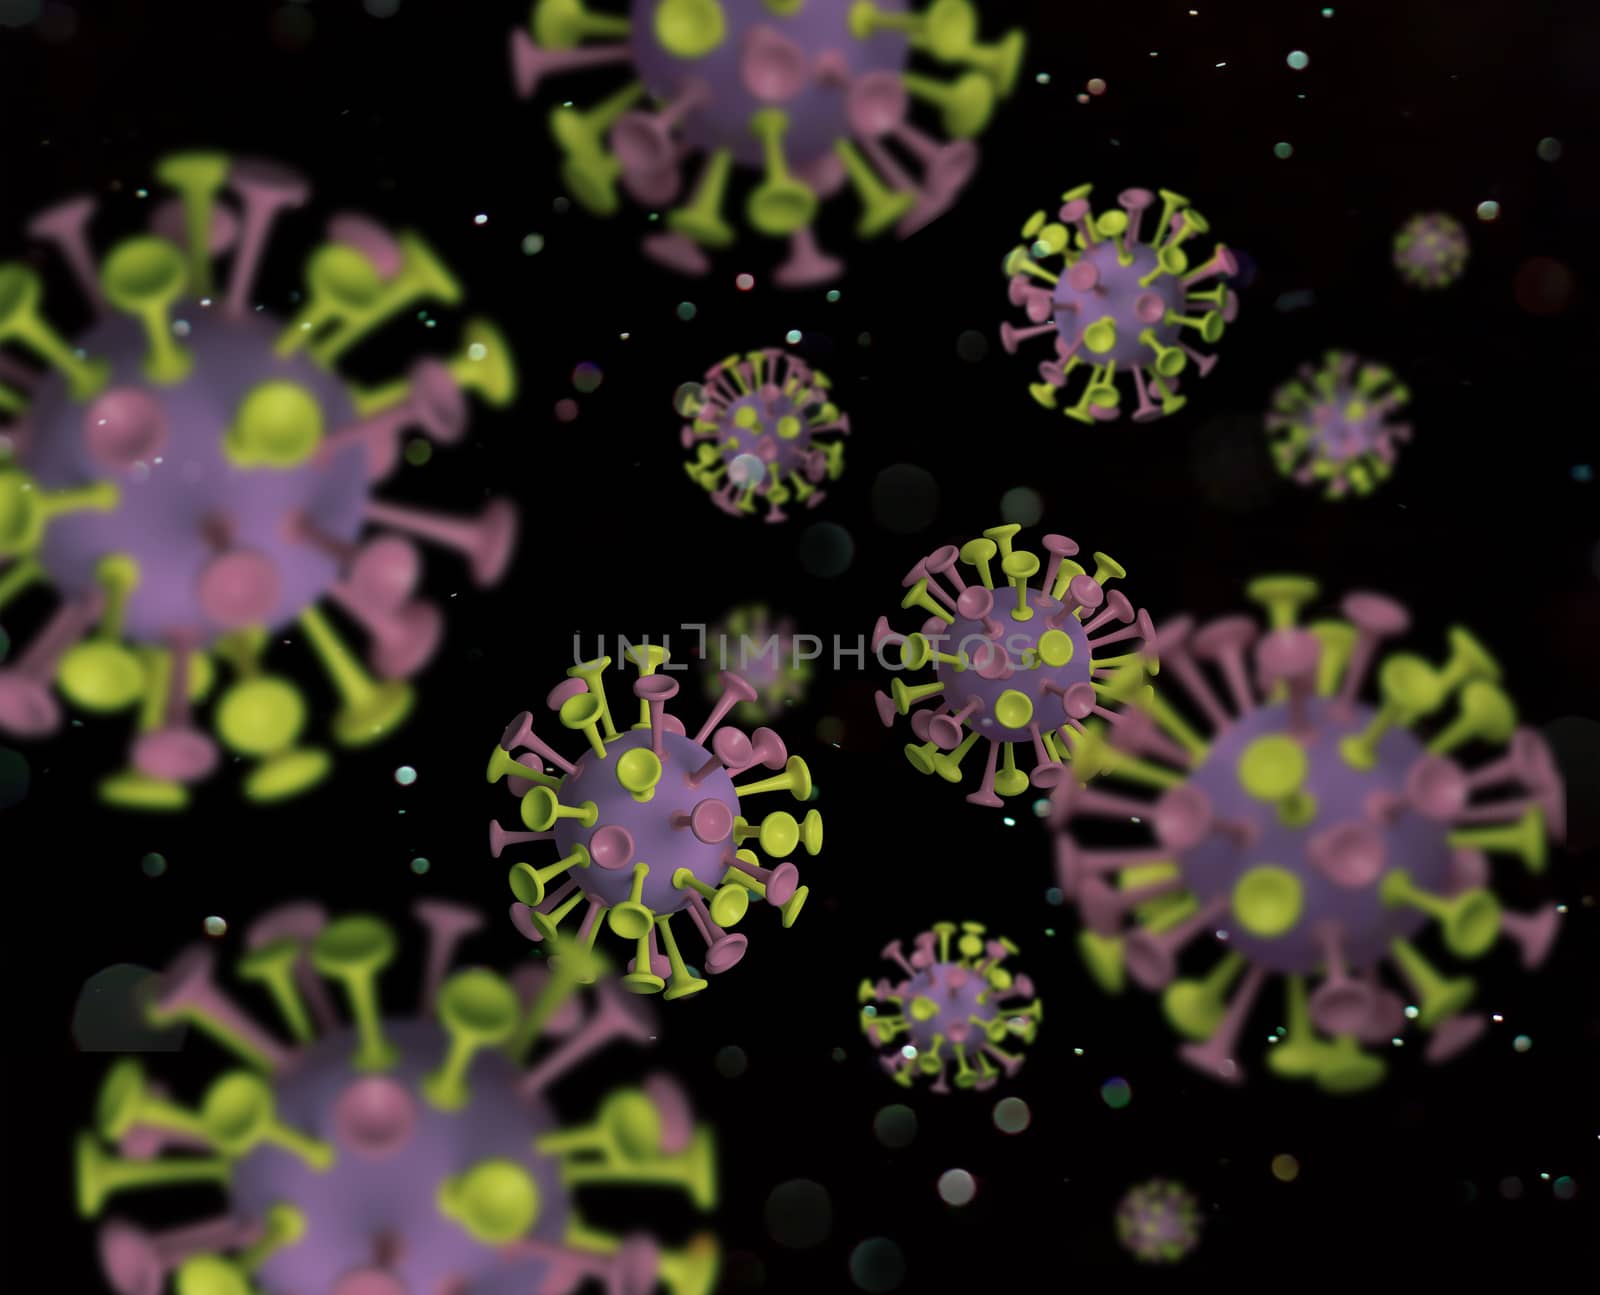 Simplified close-up illustration 3D of corona viruses by anterovium